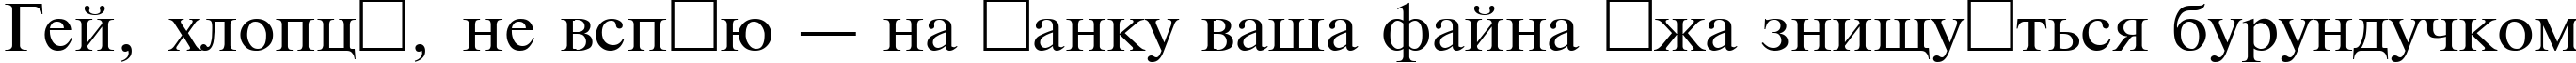 Пример написания шрифтом TimesET105n текста на украинском